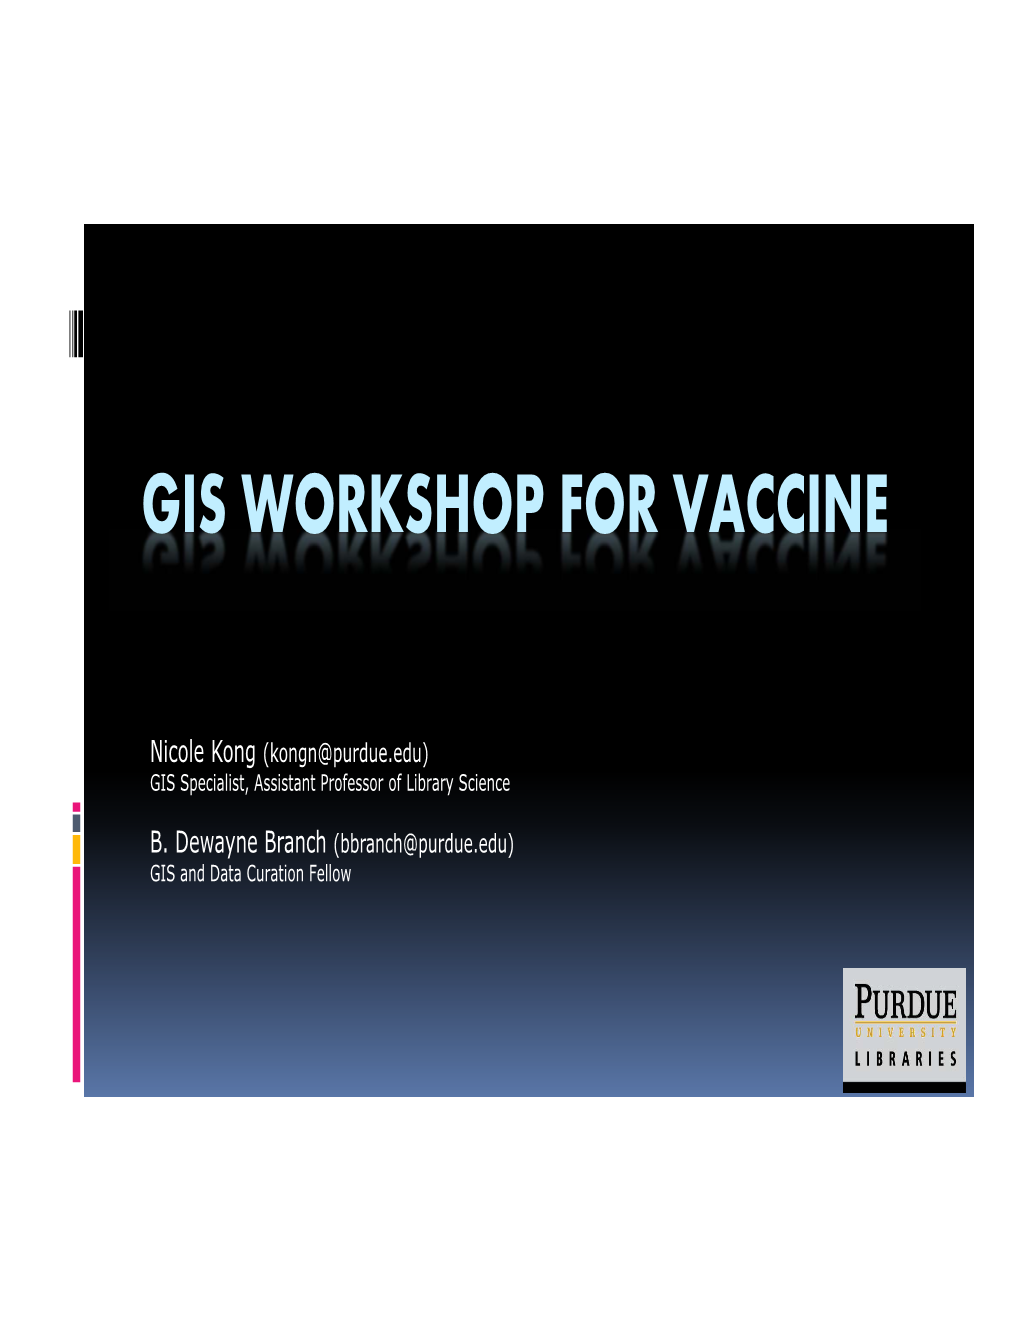 Gis Workshop for Vaccine